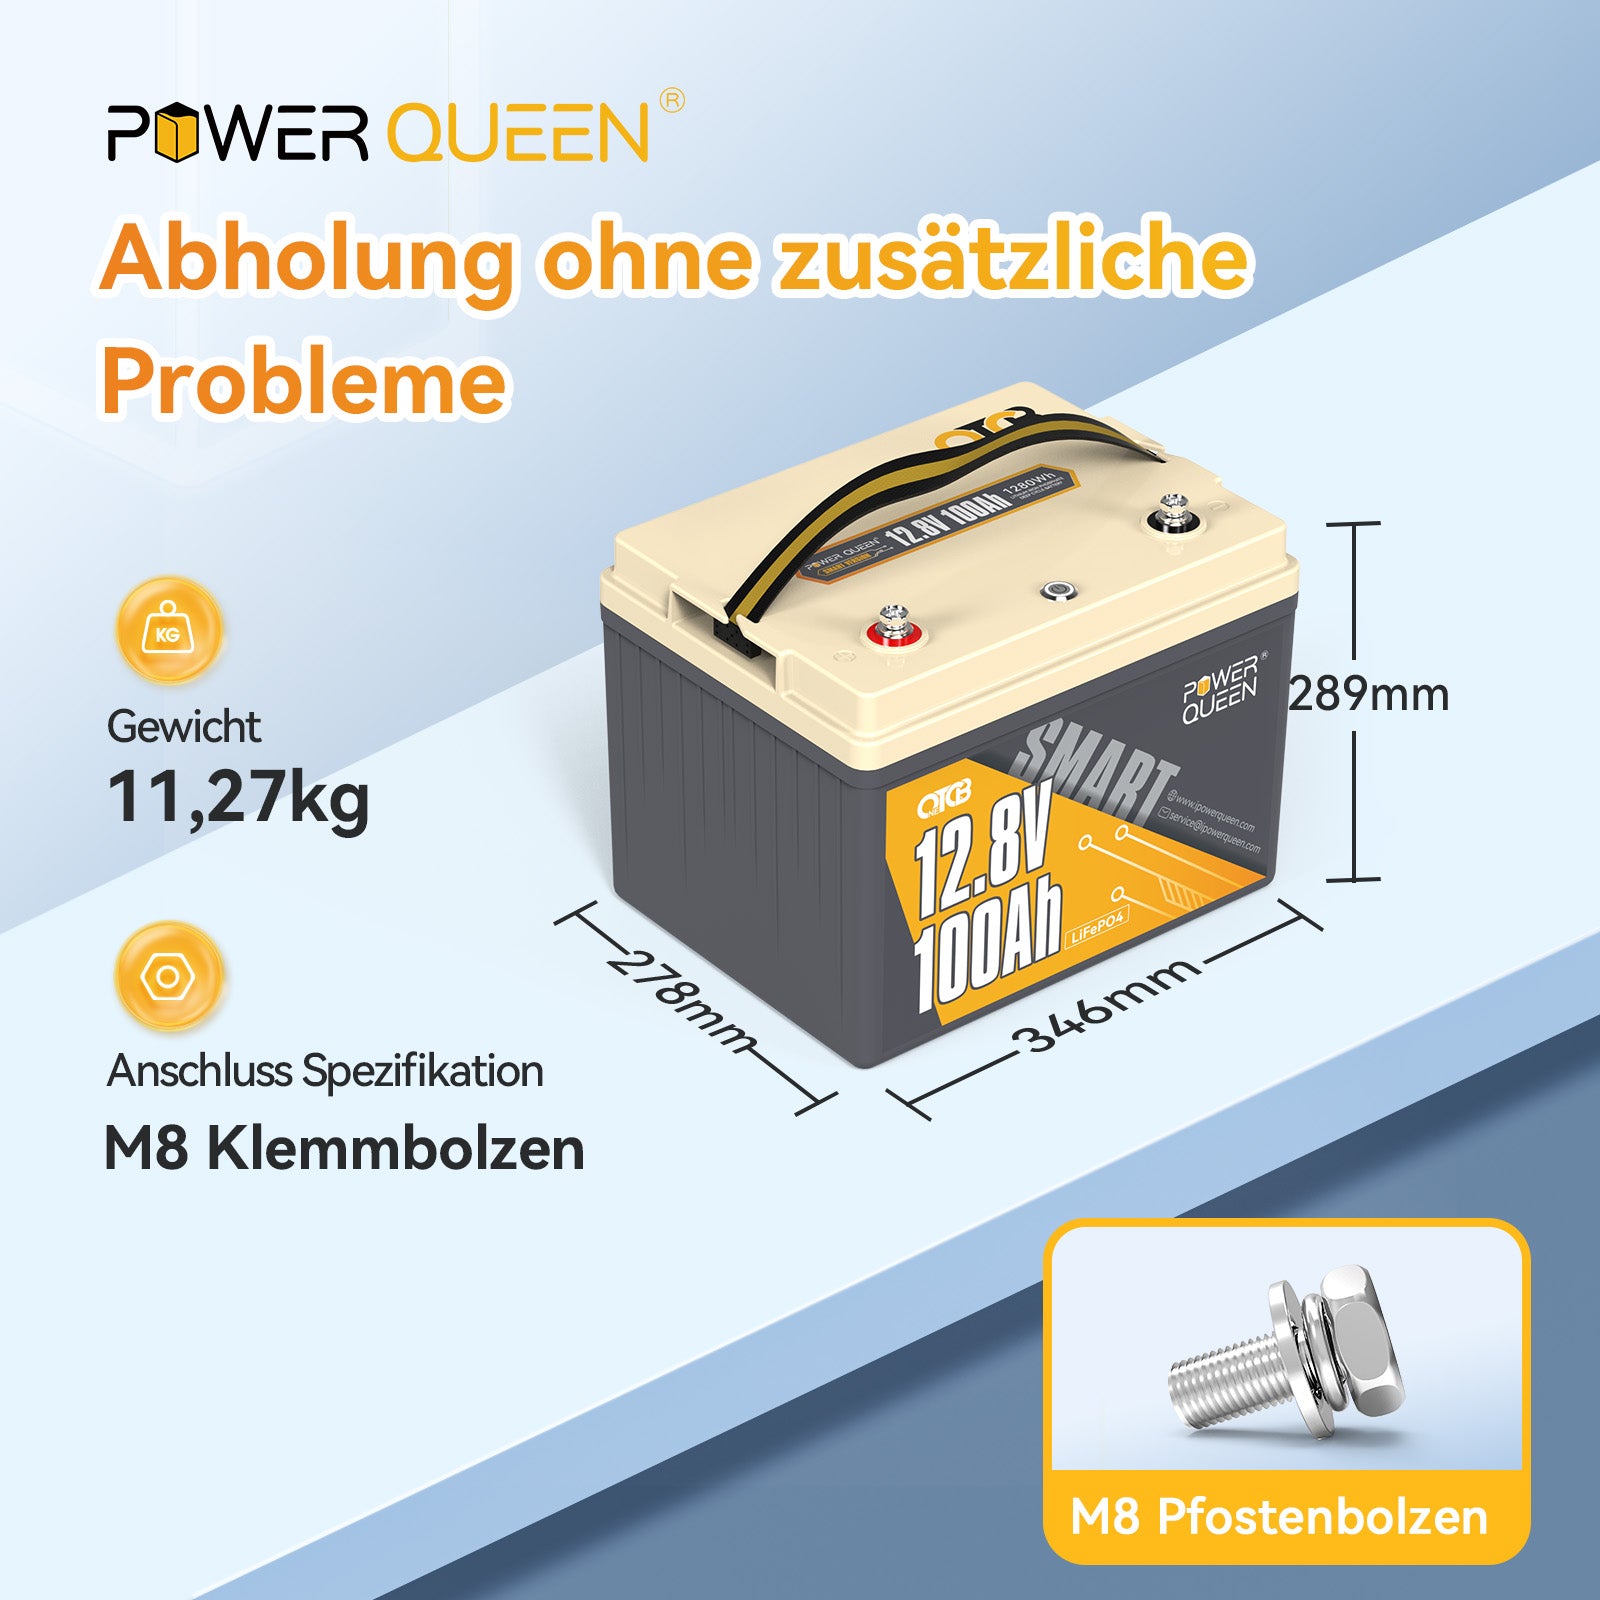 Batteria Power Queen 12,8 V 100 Ah OTCB Smart LiFePO4, BMS 100 A integrato